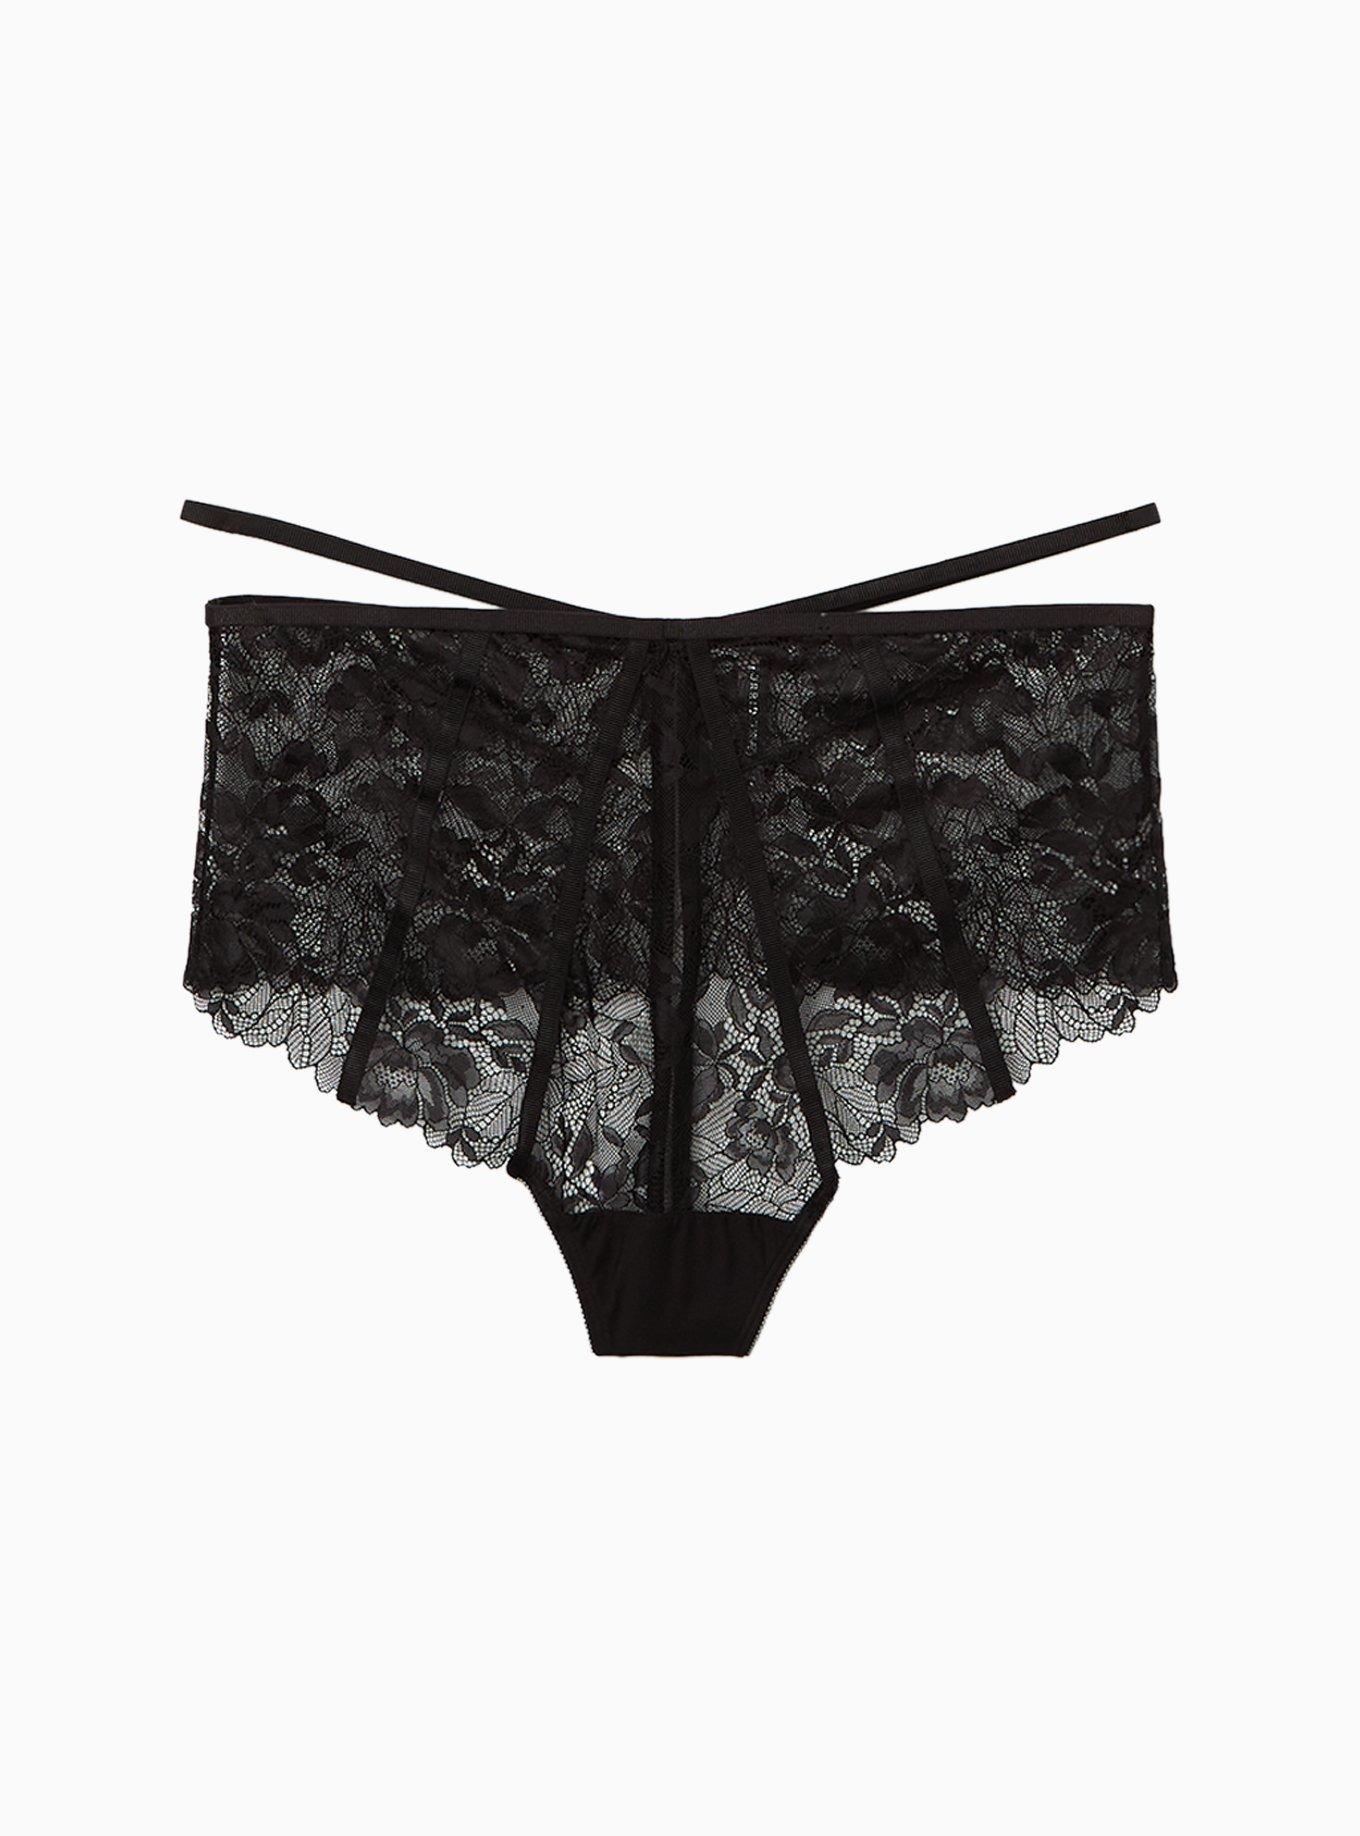 Torrid Black 4-Way Stretch High Waist Lace Thong Panty Plus Size 4X, 26